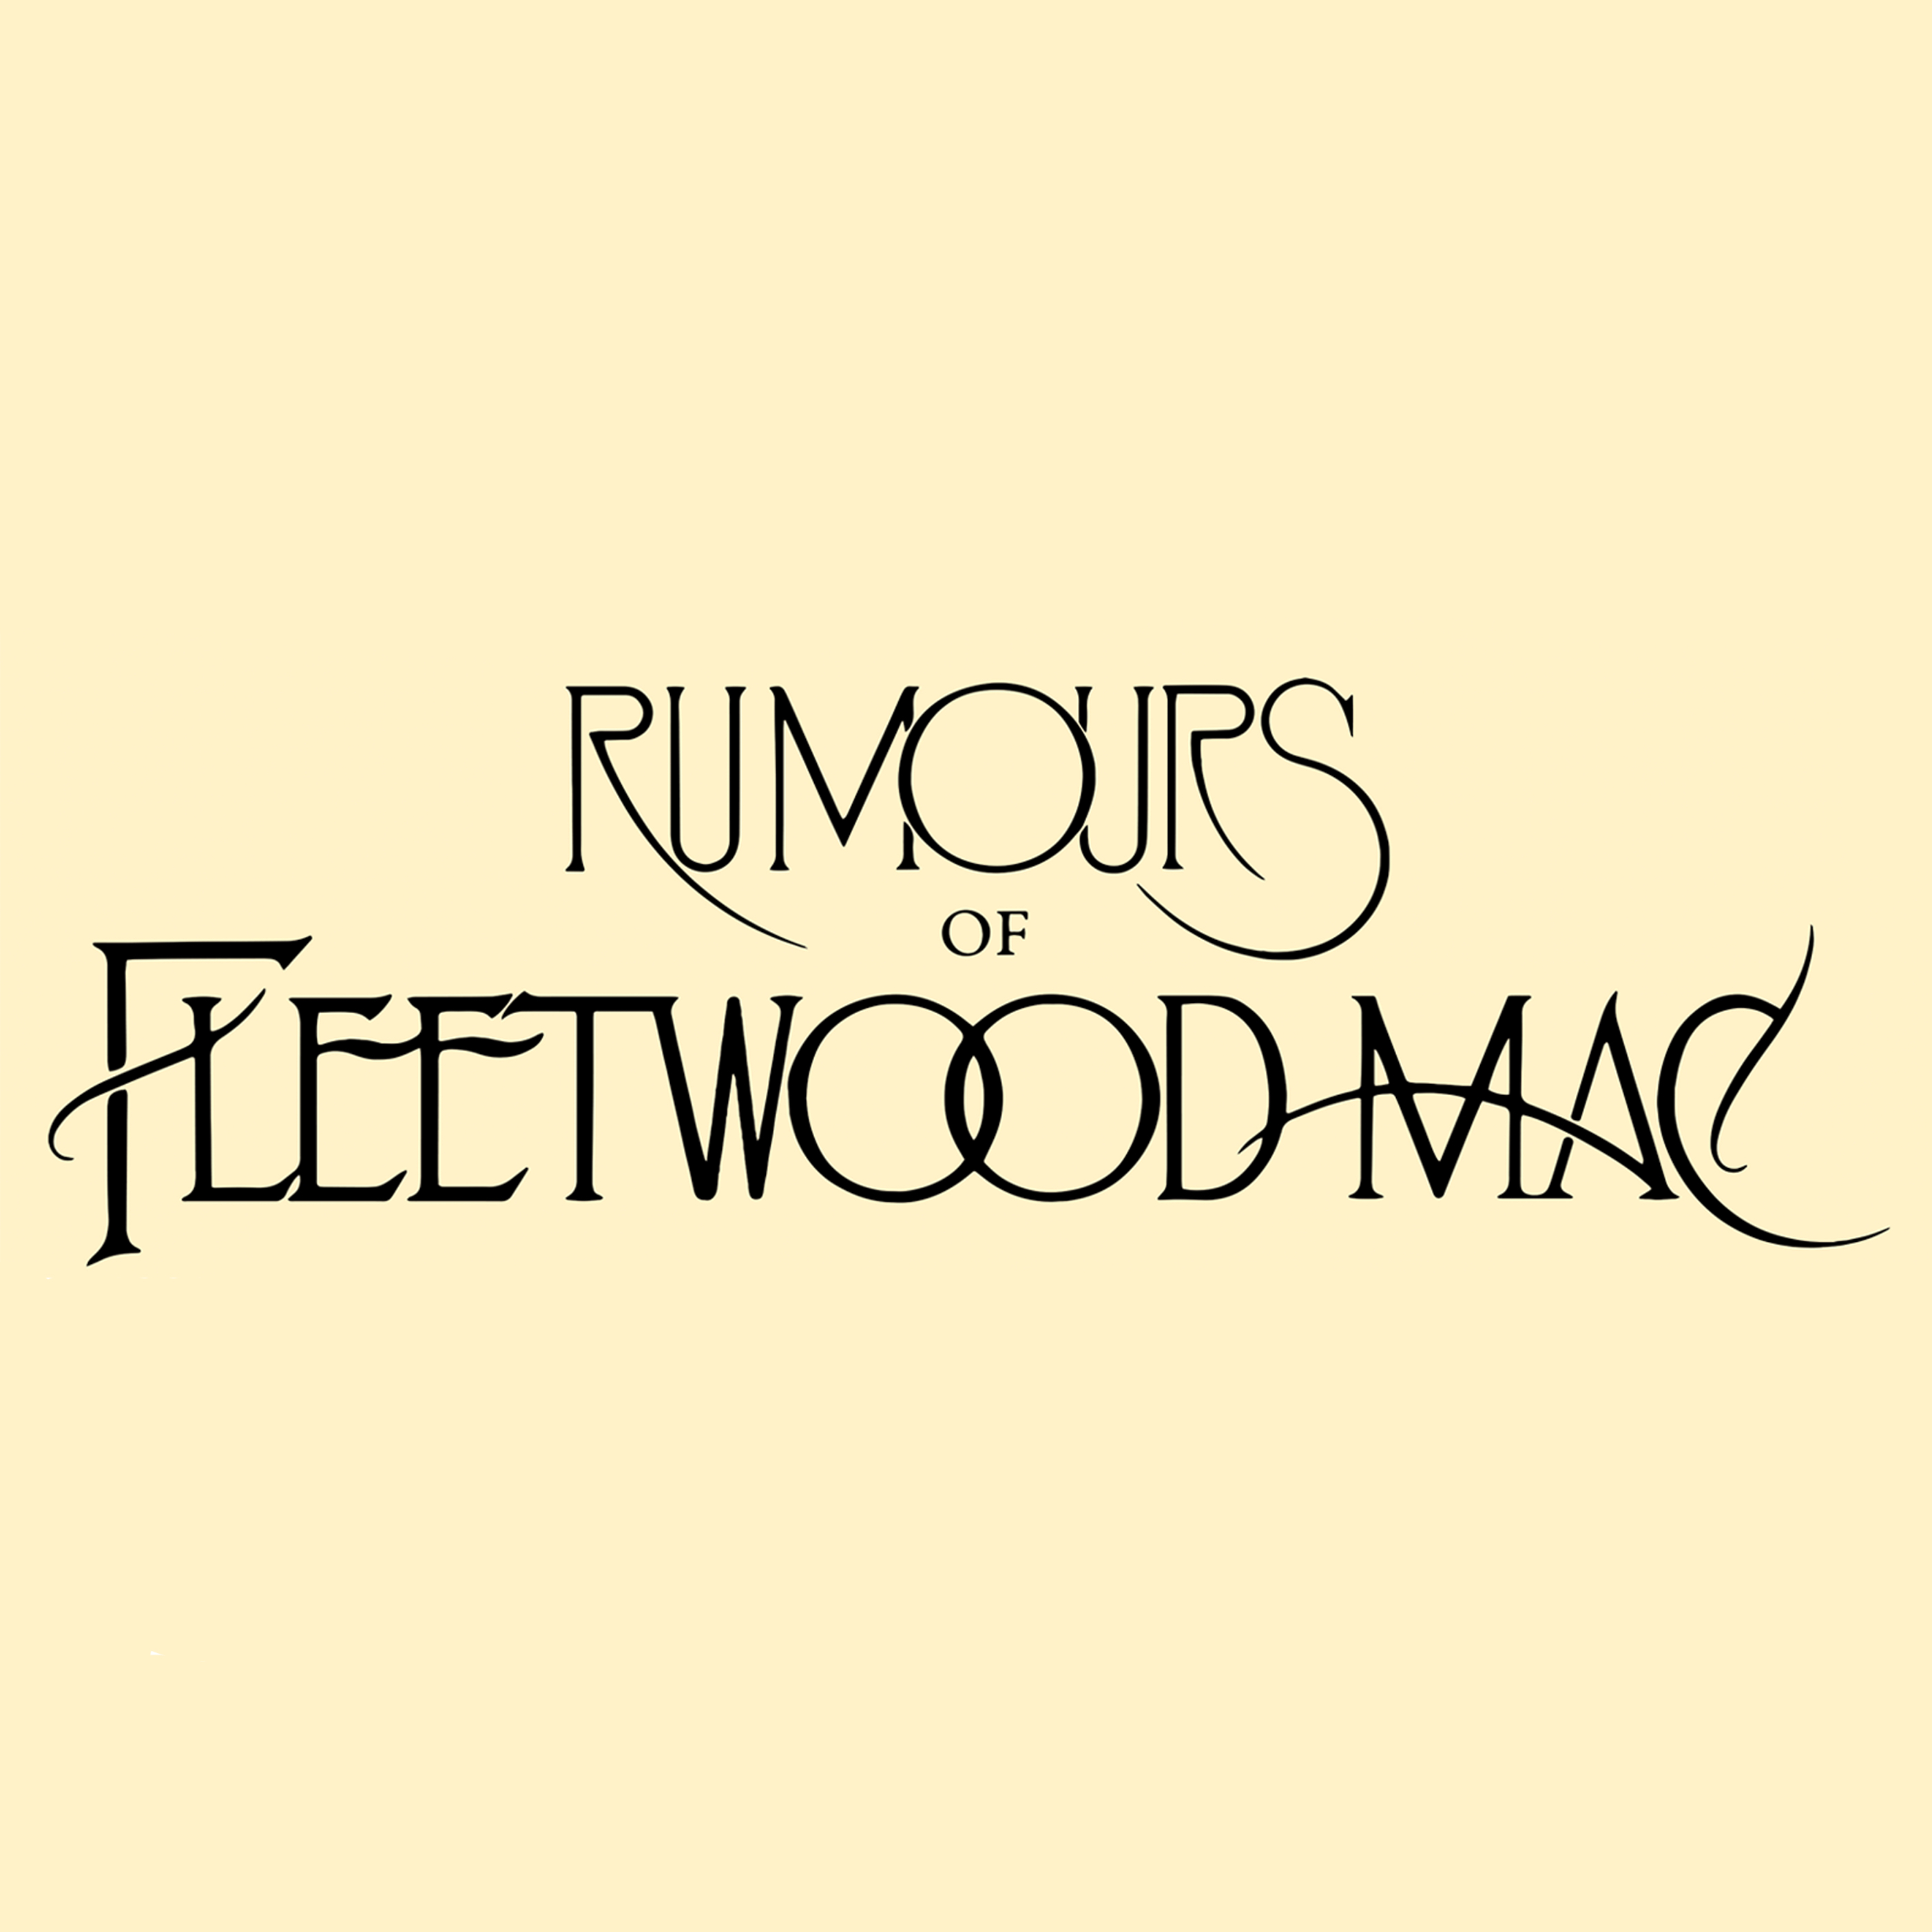 Fleetwood mac tour dates canada hoolicircles